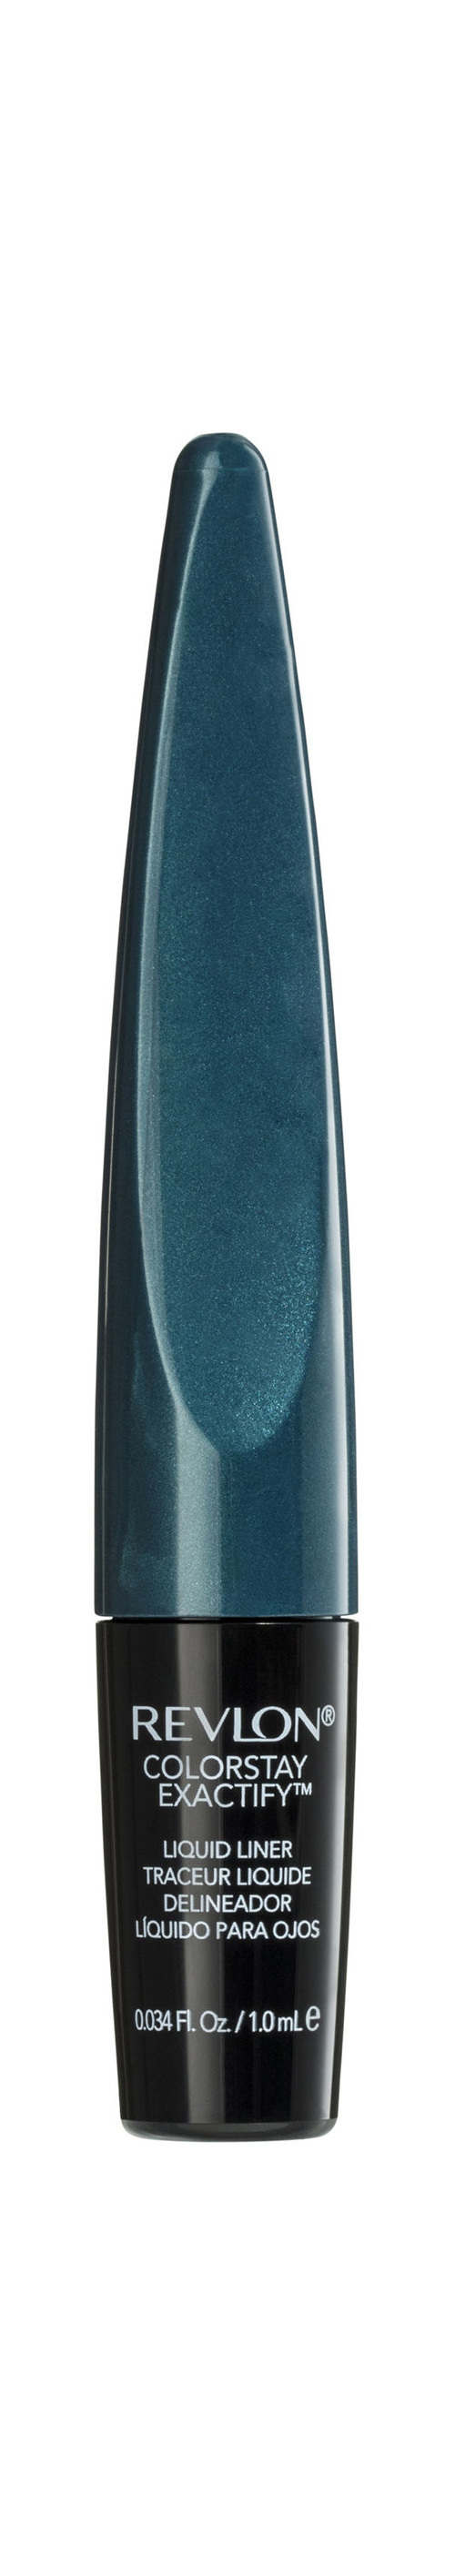 Revlon Colorstay Exactify™ Liquid Liner Mermaid Blue